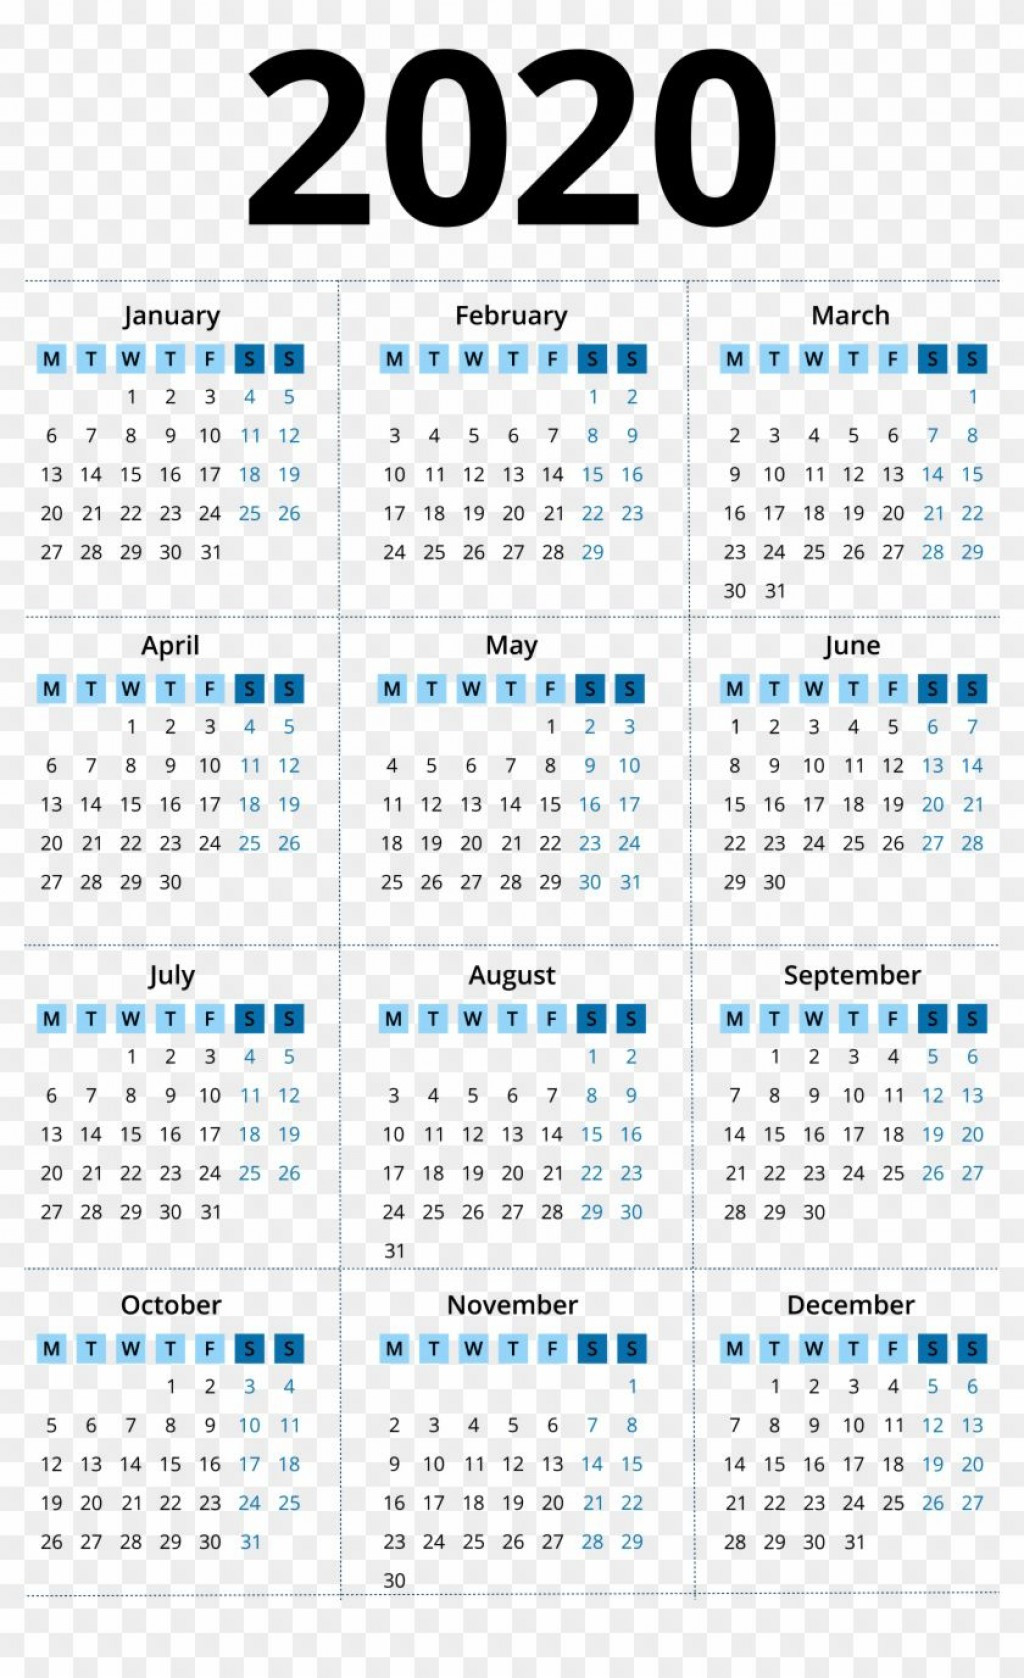 2020 Biweekly Payroll Calendar Template ~ Addictionary-Bi-Weekly Payment Calendar Template 2021